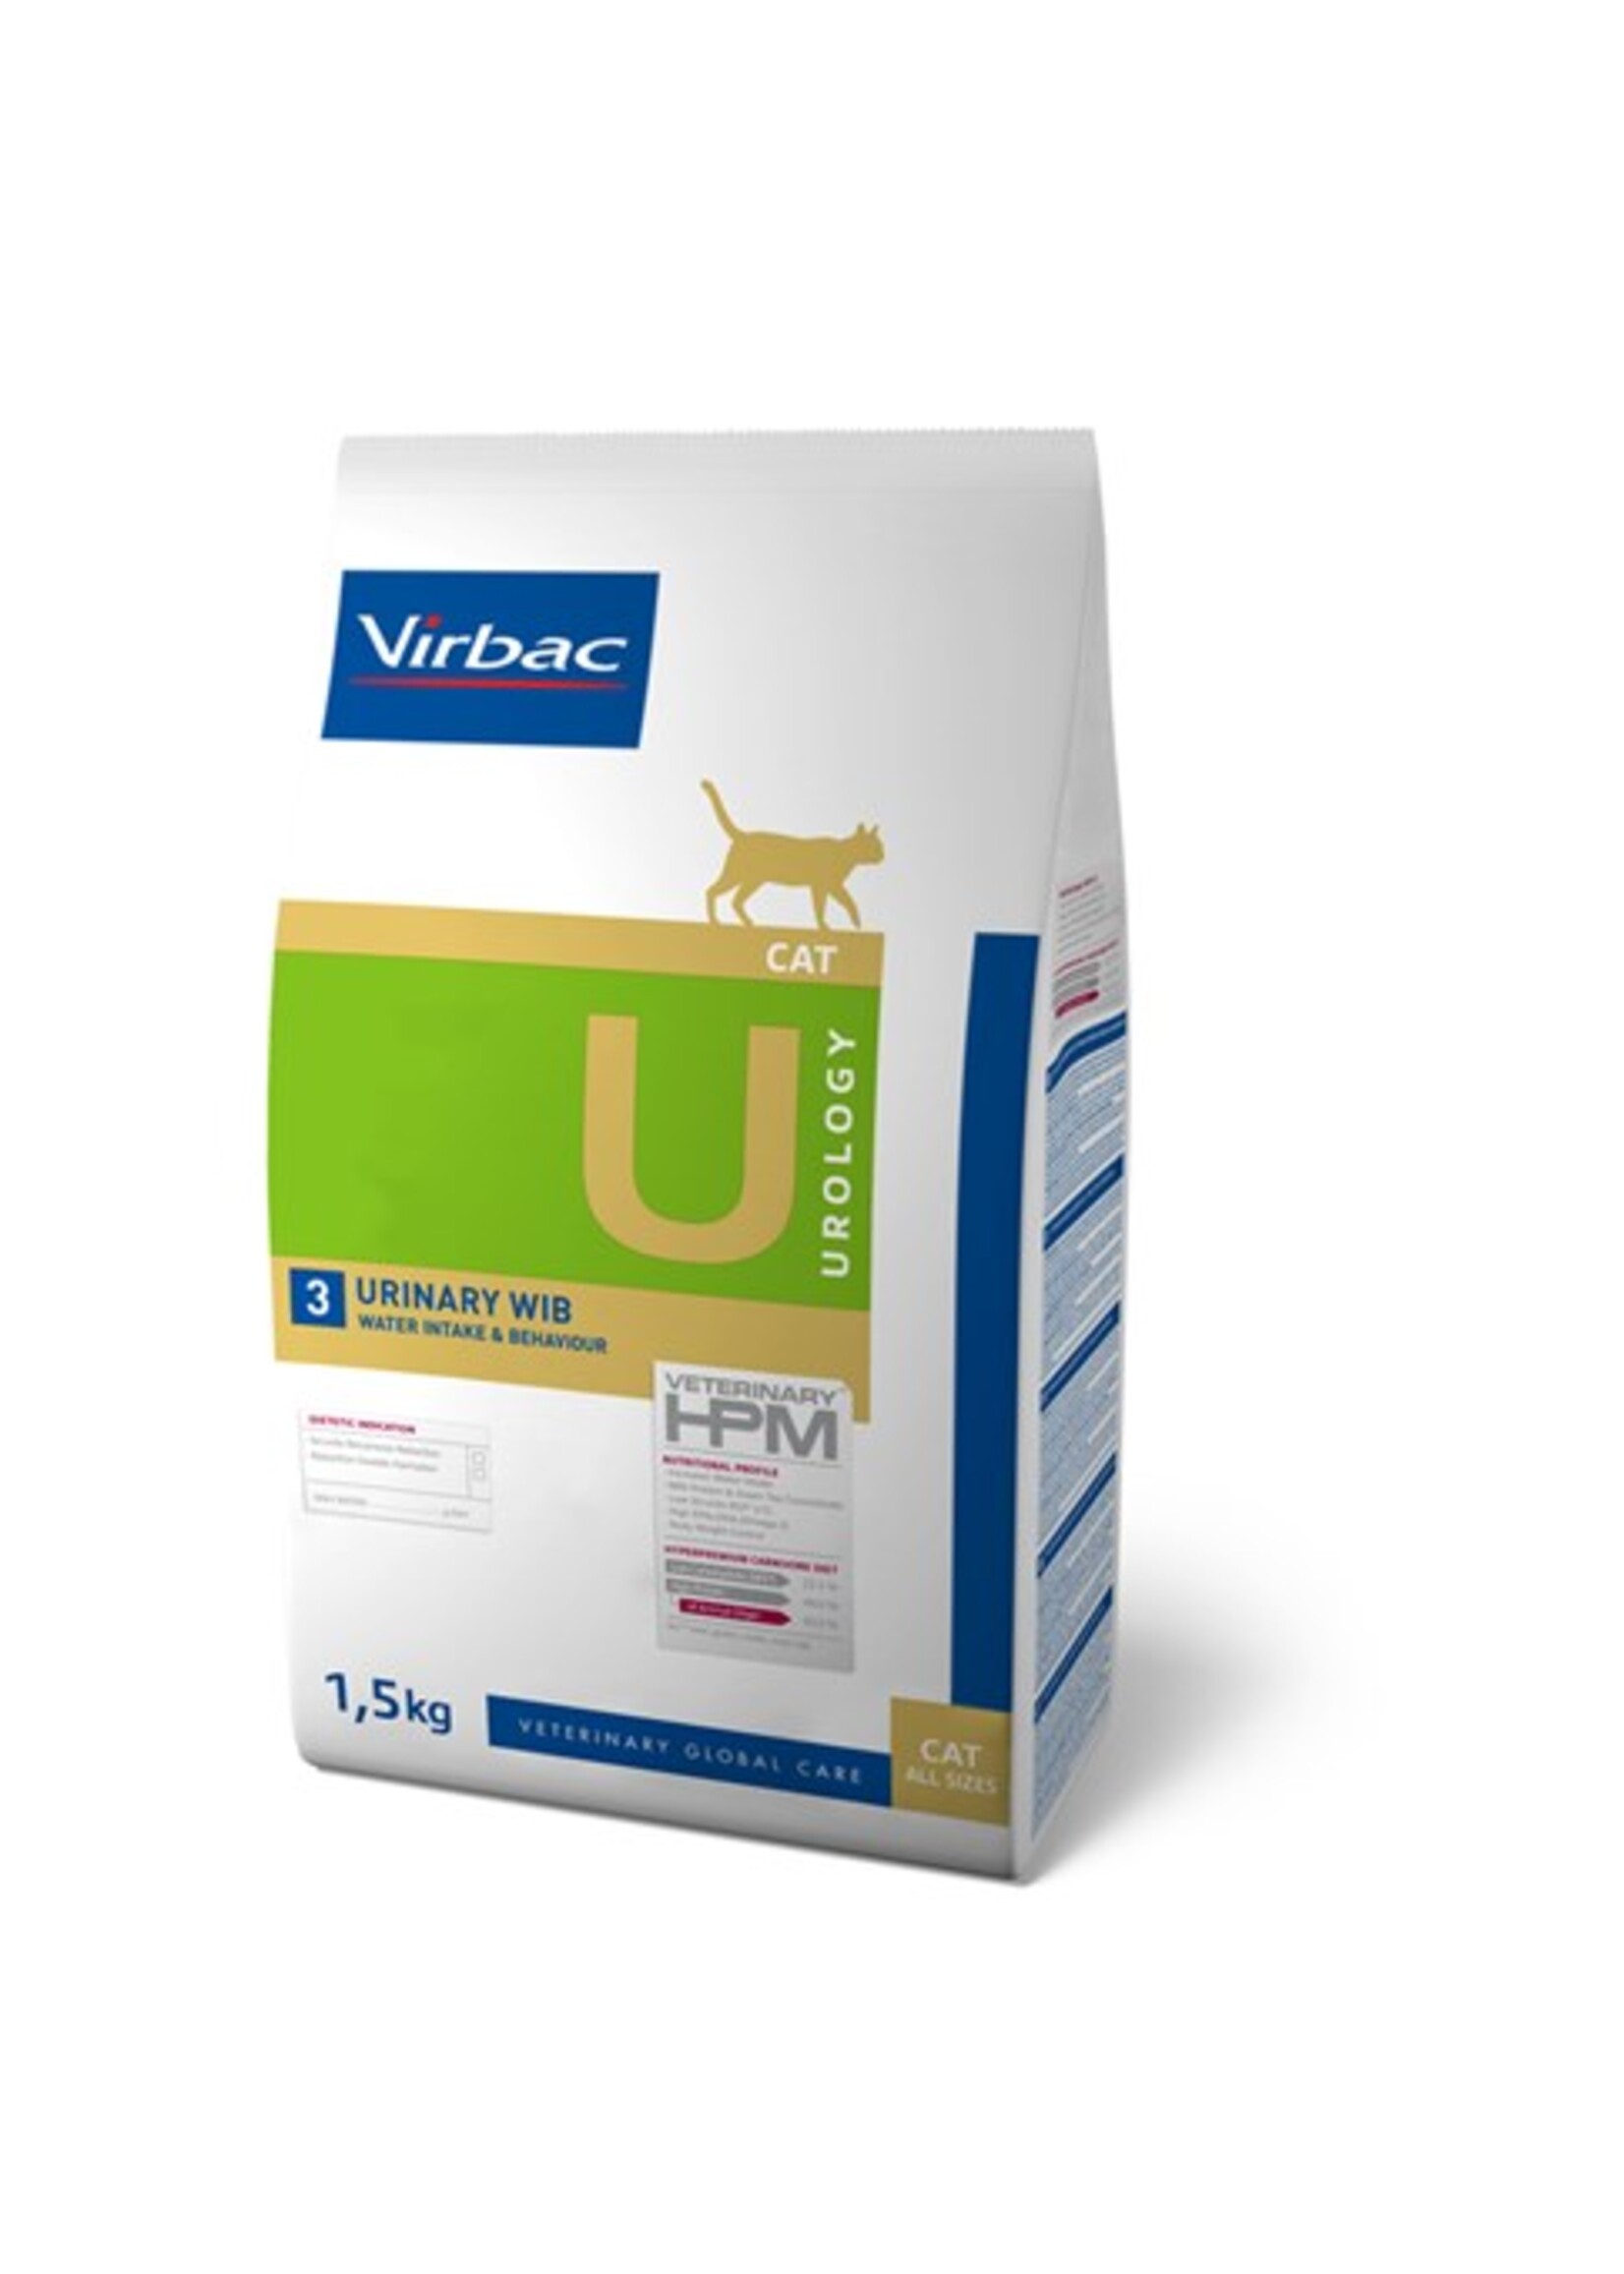 Virbac Virbac Hpm Chat Urology Urinary Wib U3 3kg